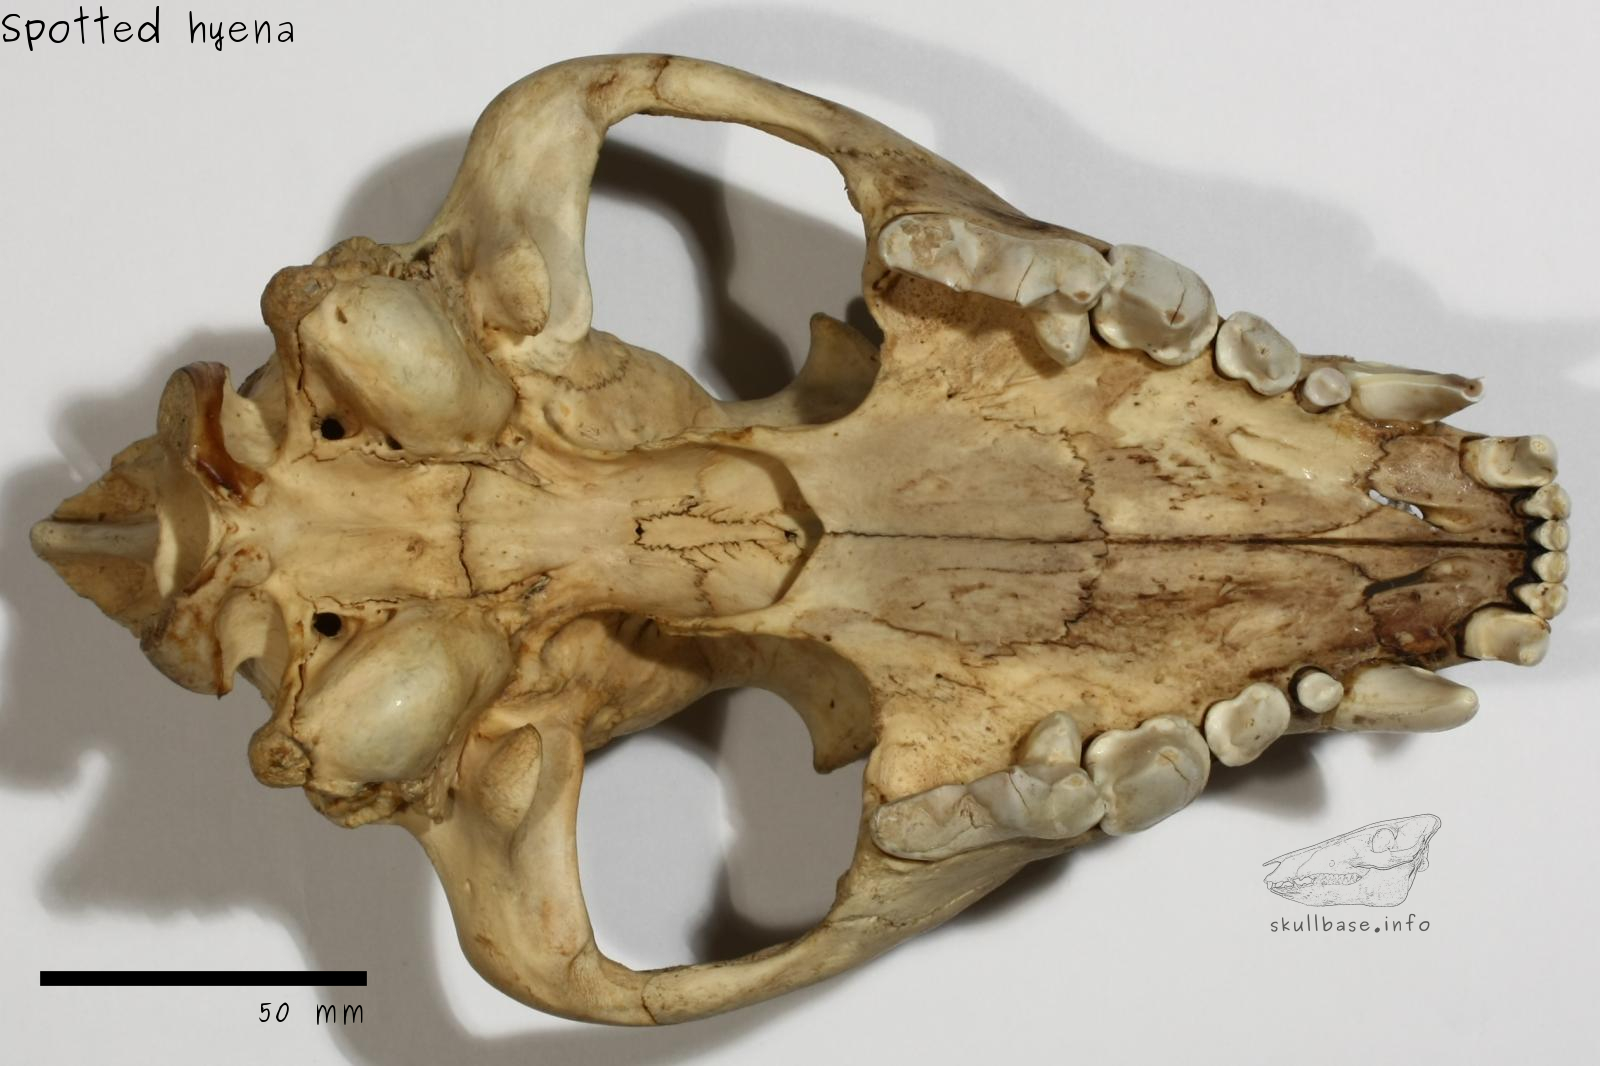 Spotted hyena (Crocuta crocuta) skull ventral view